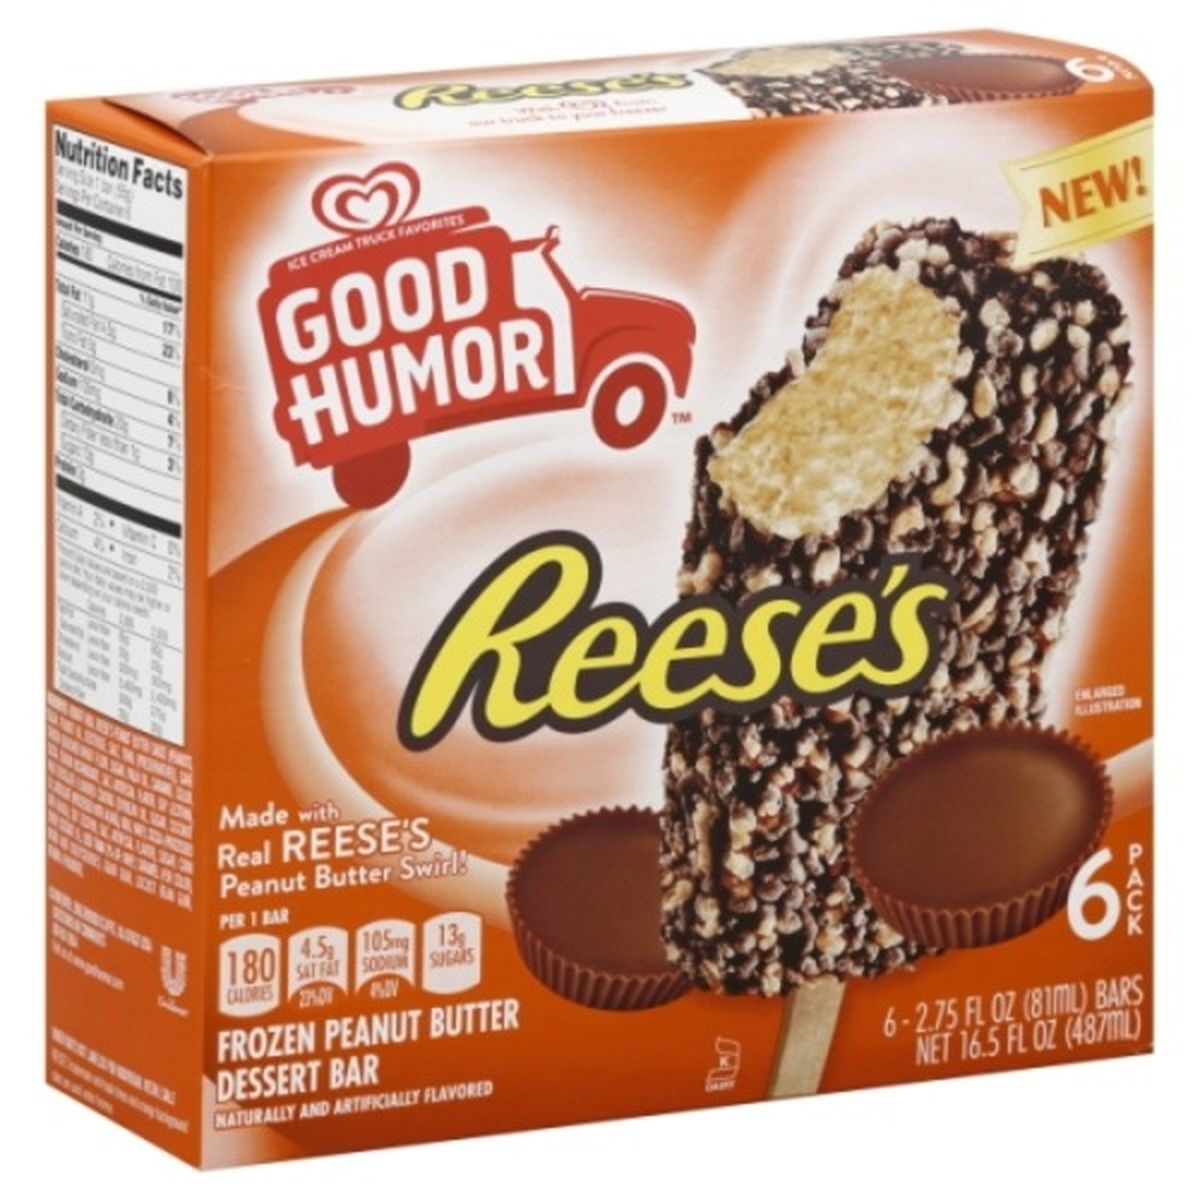 Calories in Good Humor Dessert Bar, Peanut Butter, Reese's, Frozen